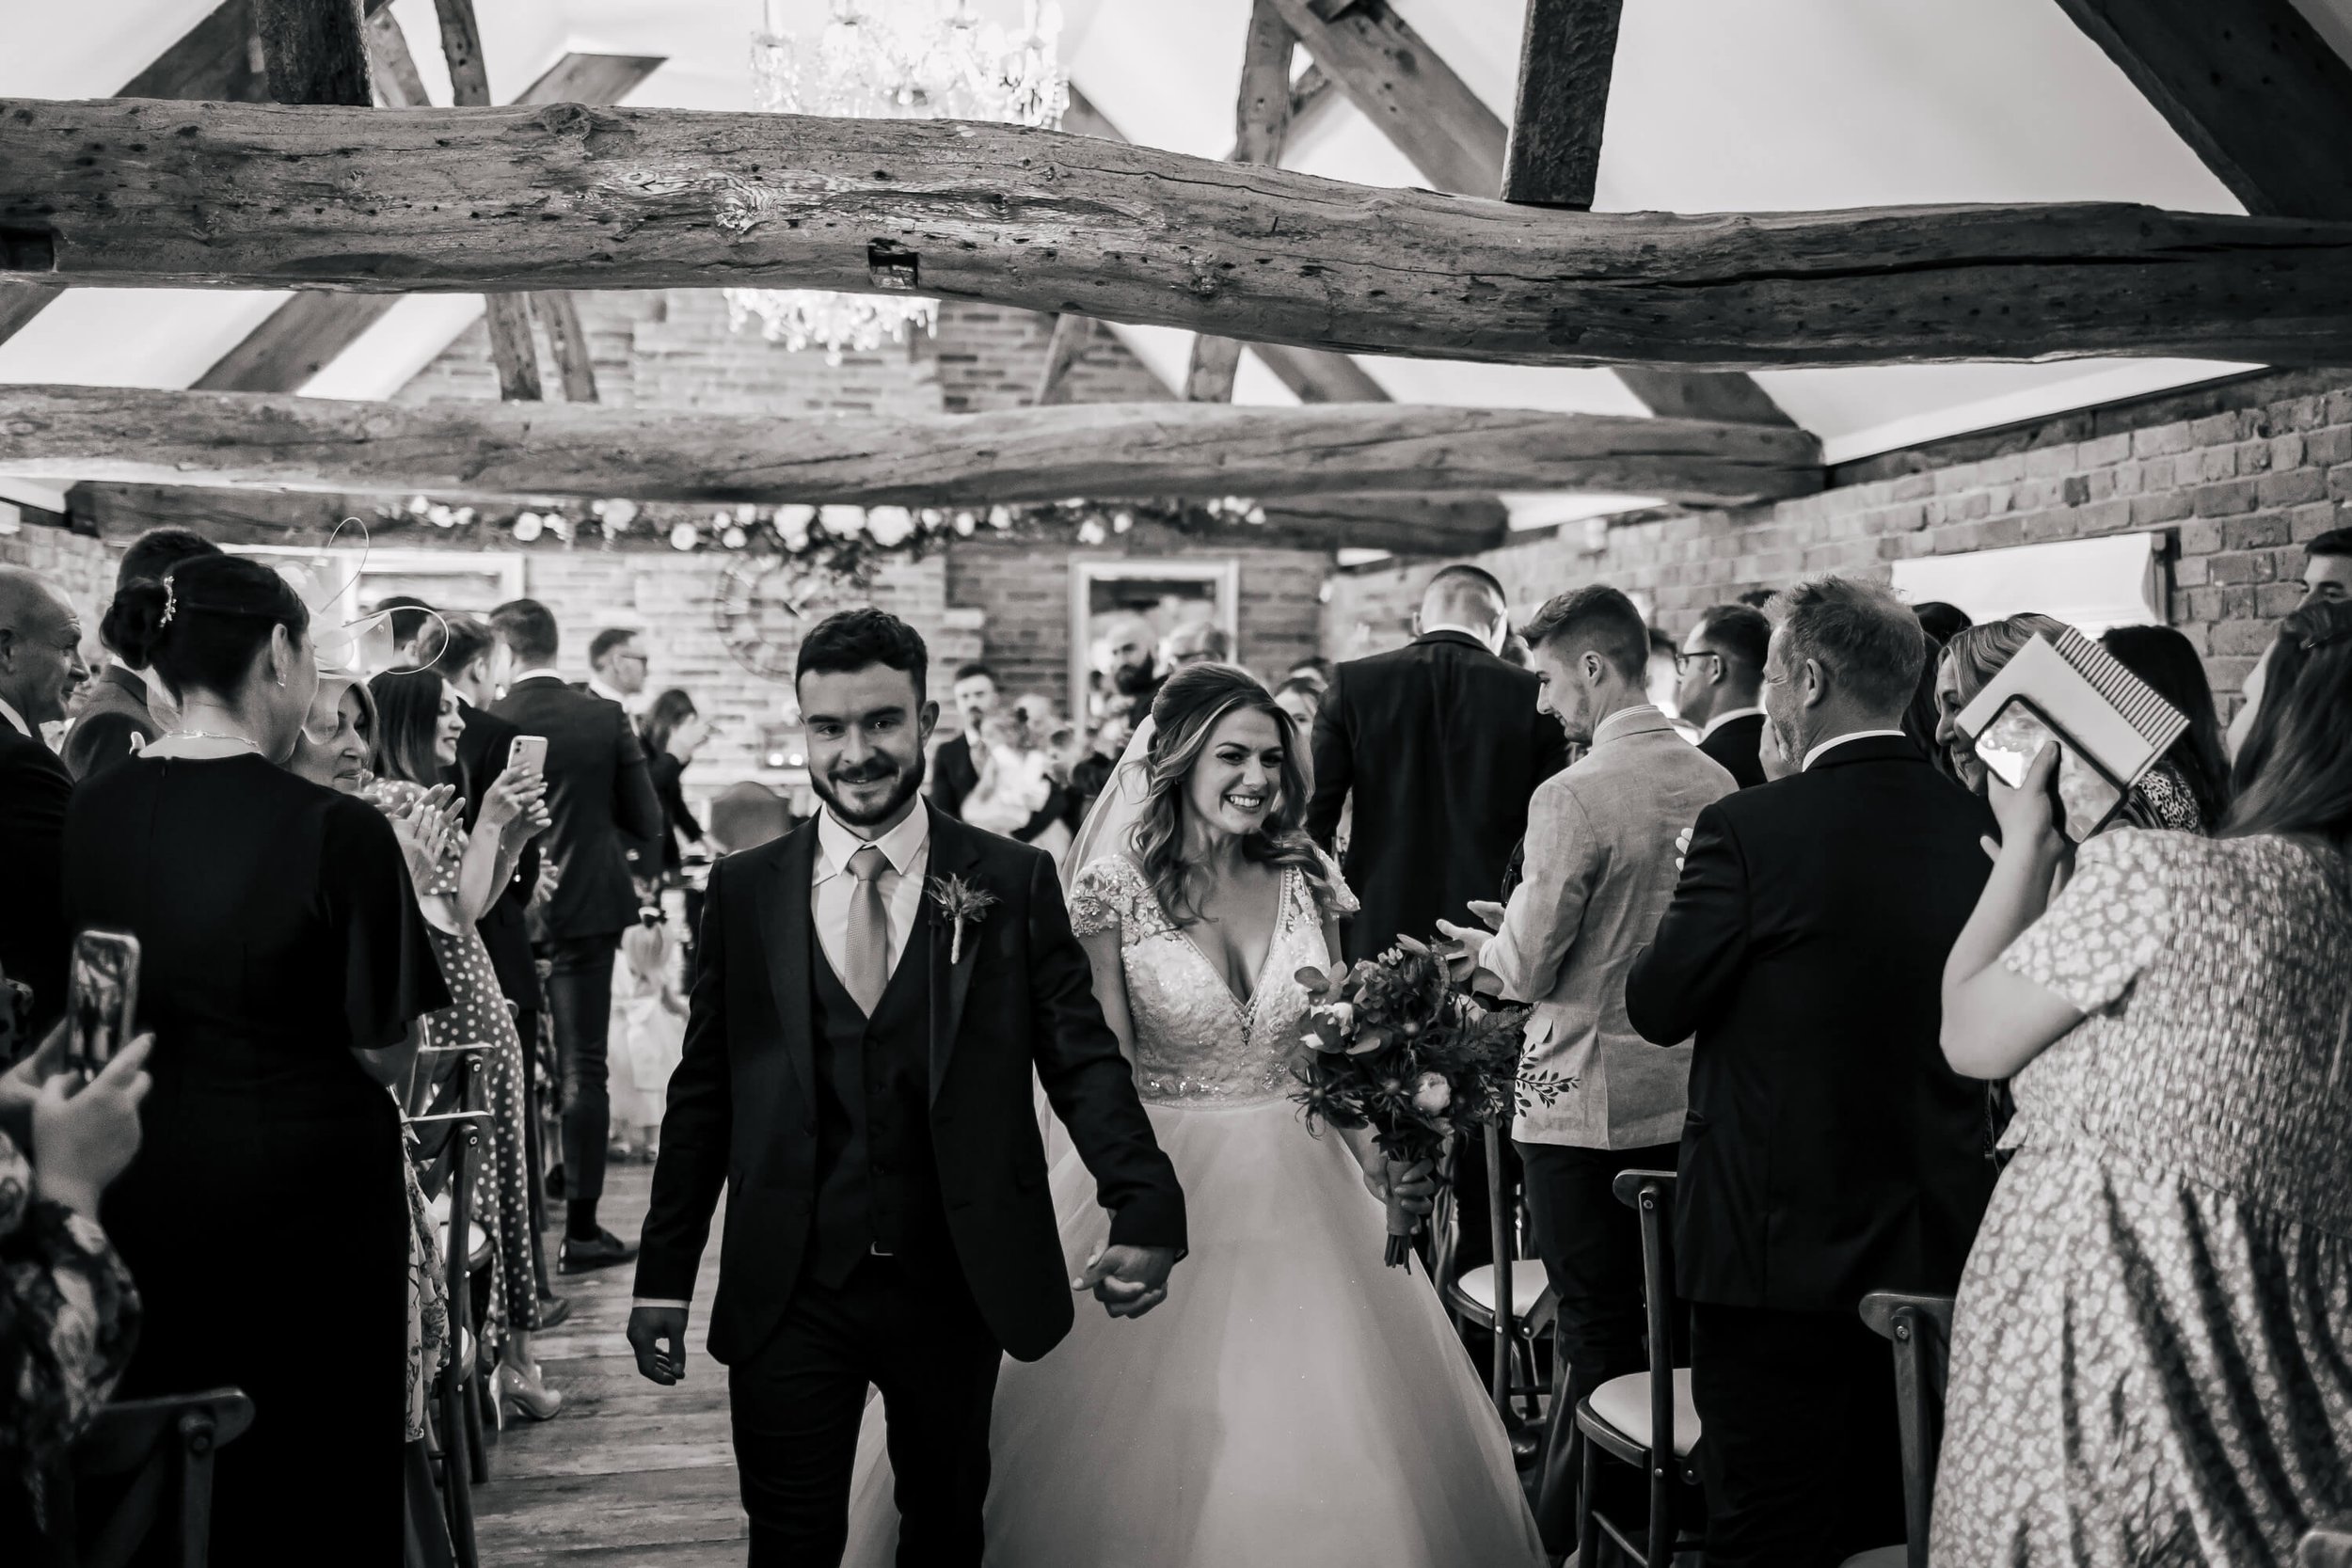 Bride and groom walking down the aisle at a Swancar Farm wedding